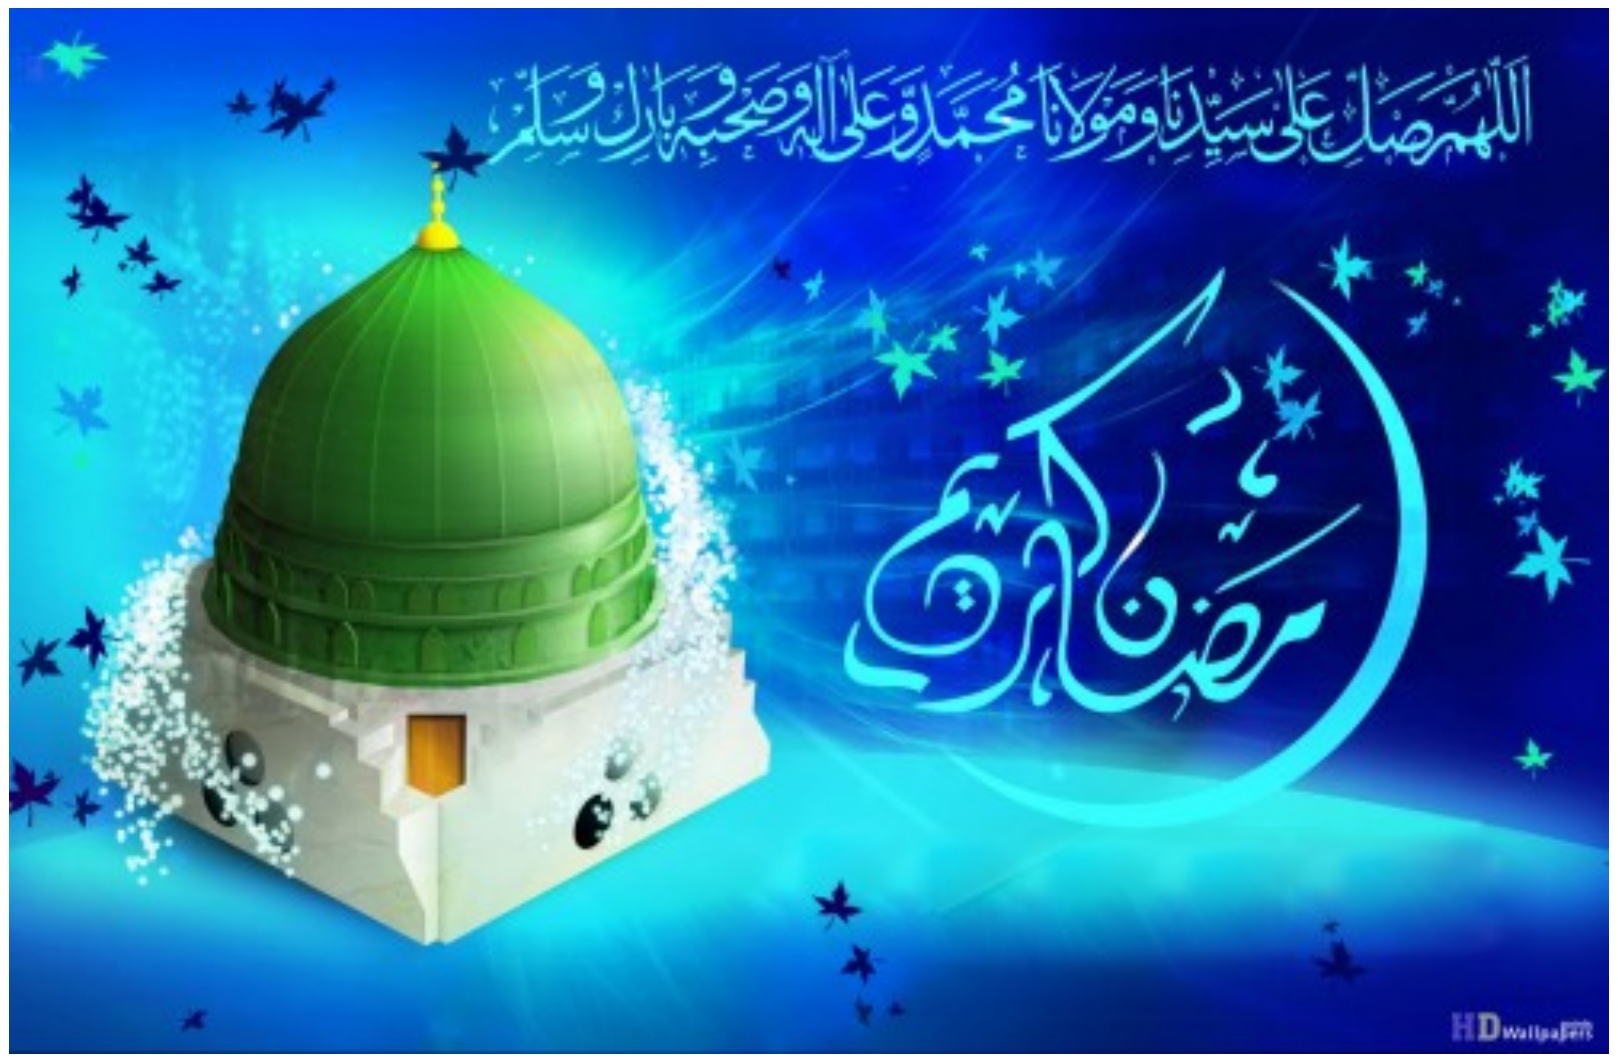 high quality ramadan wallpaper,blue,green,world,graphic design,illustration